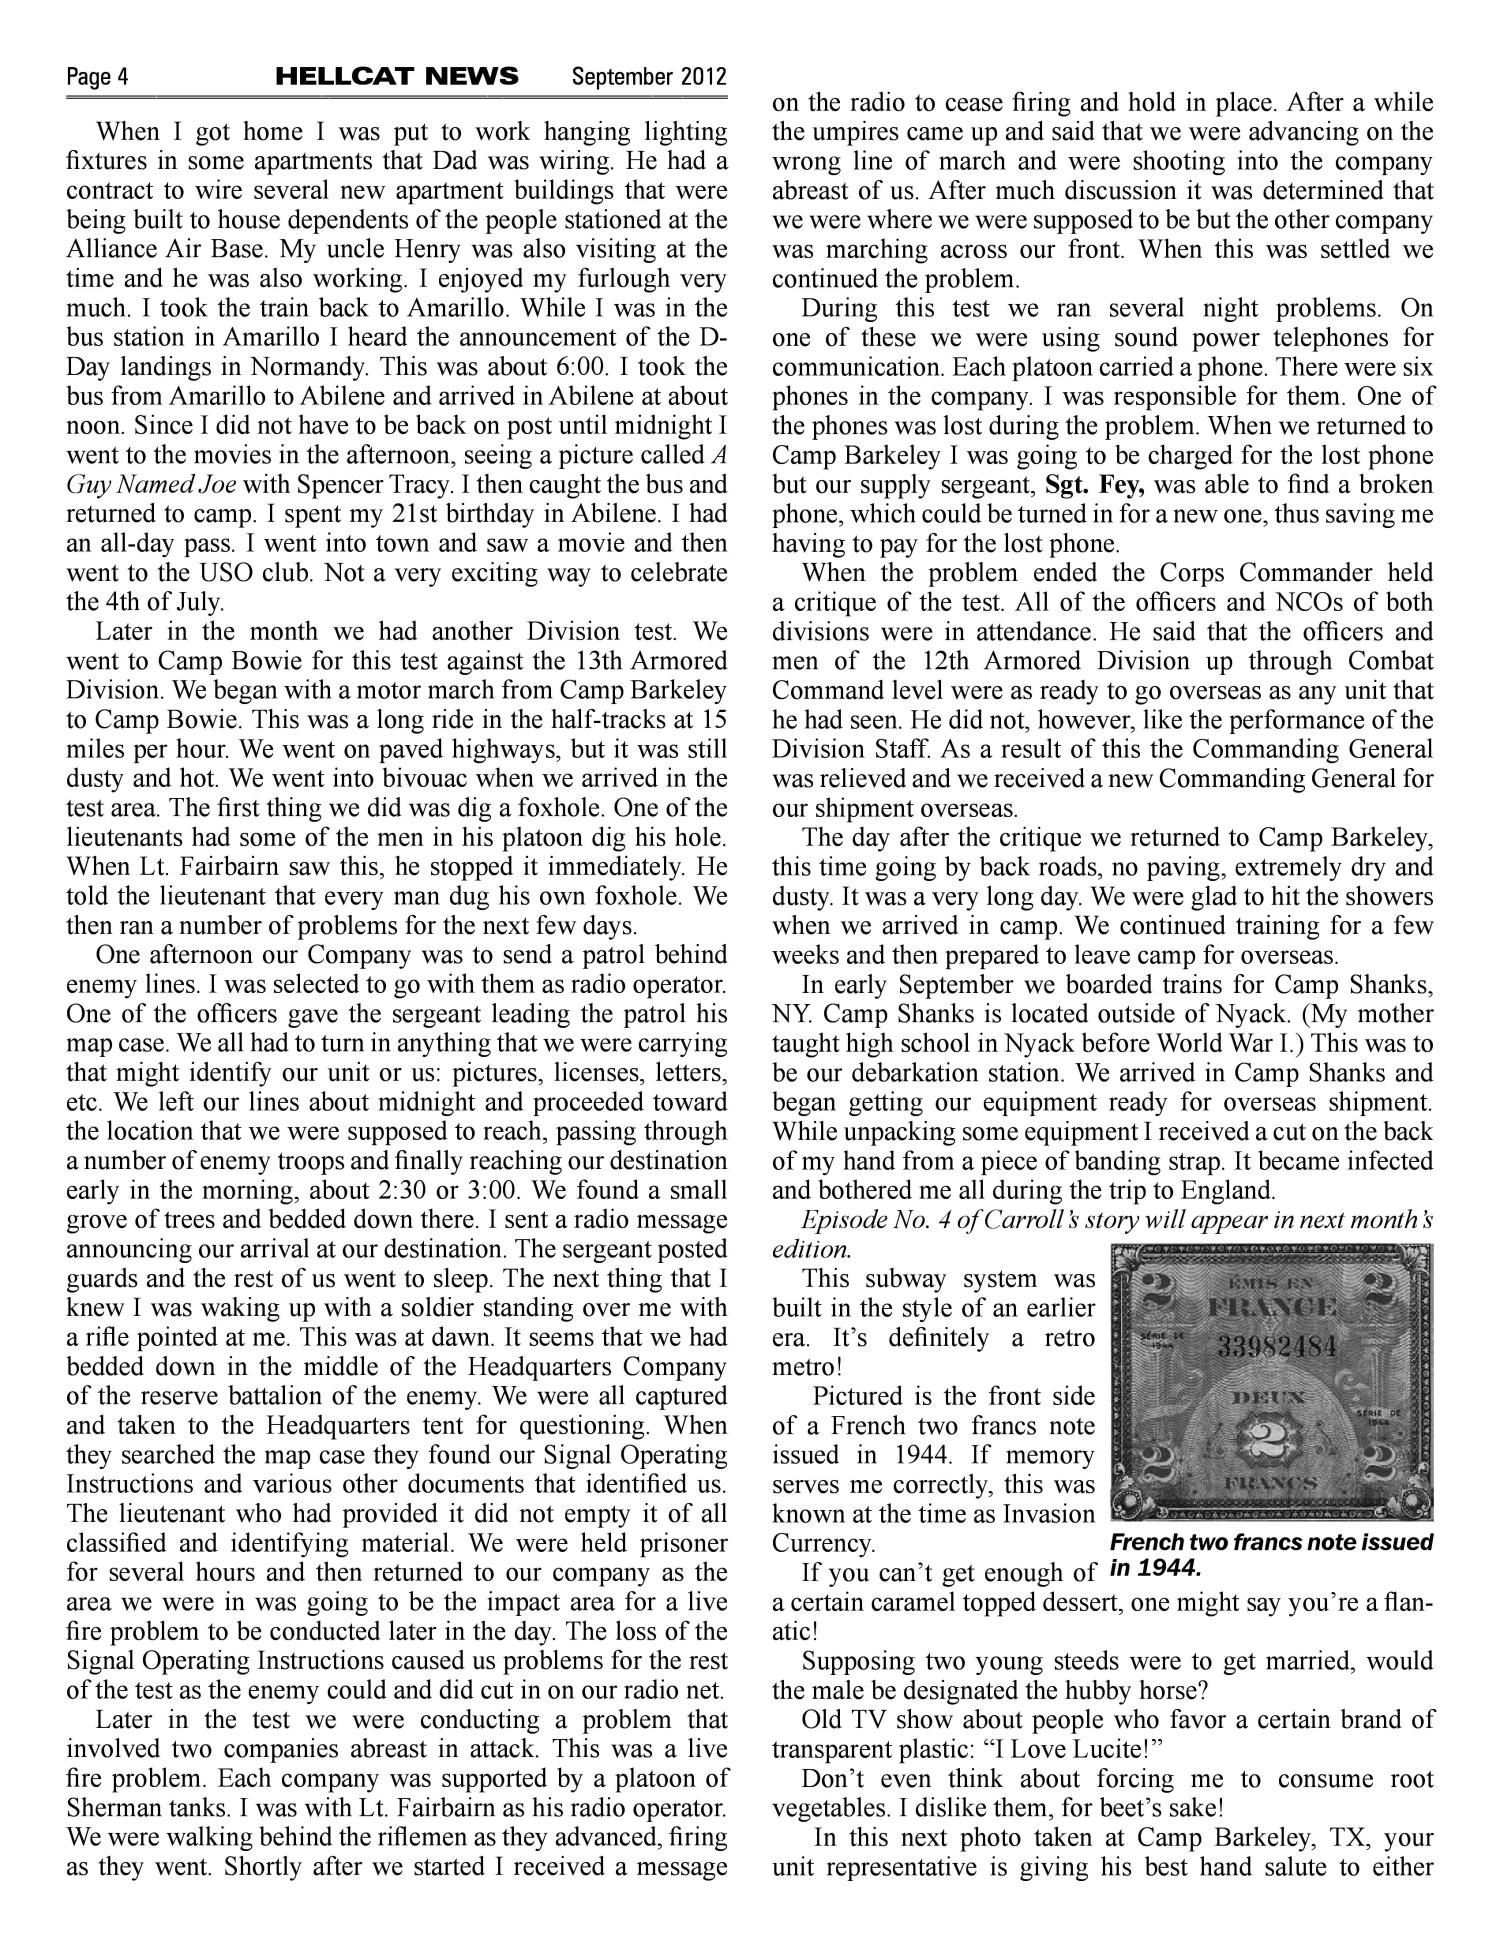 Hellcat News (Garnet Valley, Pa.), Vol. 66, No. 1, Ed. 1, September 2012
                                                
                                                    [Sequence #]: 4 of 28
                                                